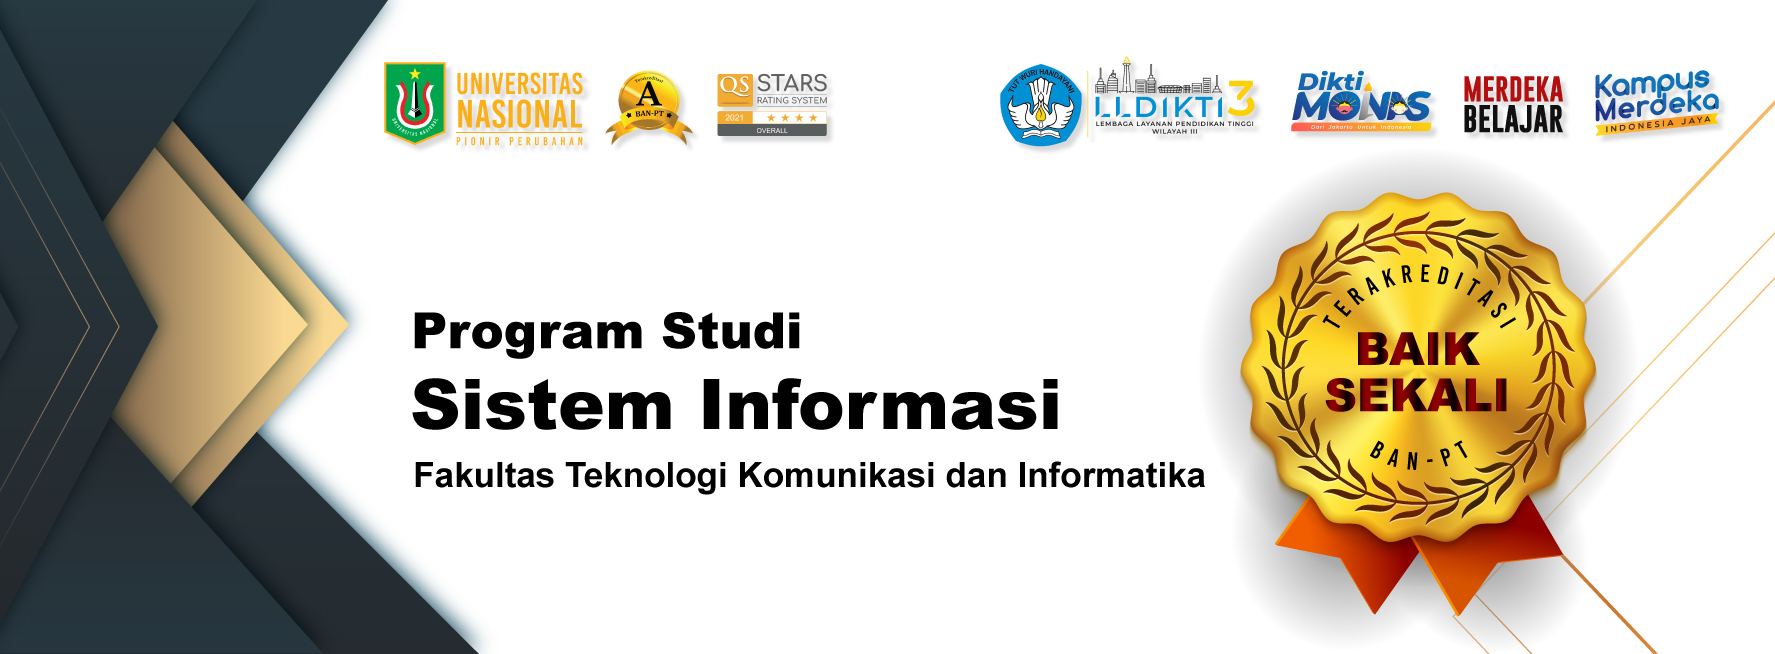 Banner-Akreditasi-Prodi-Sistem-Informasi